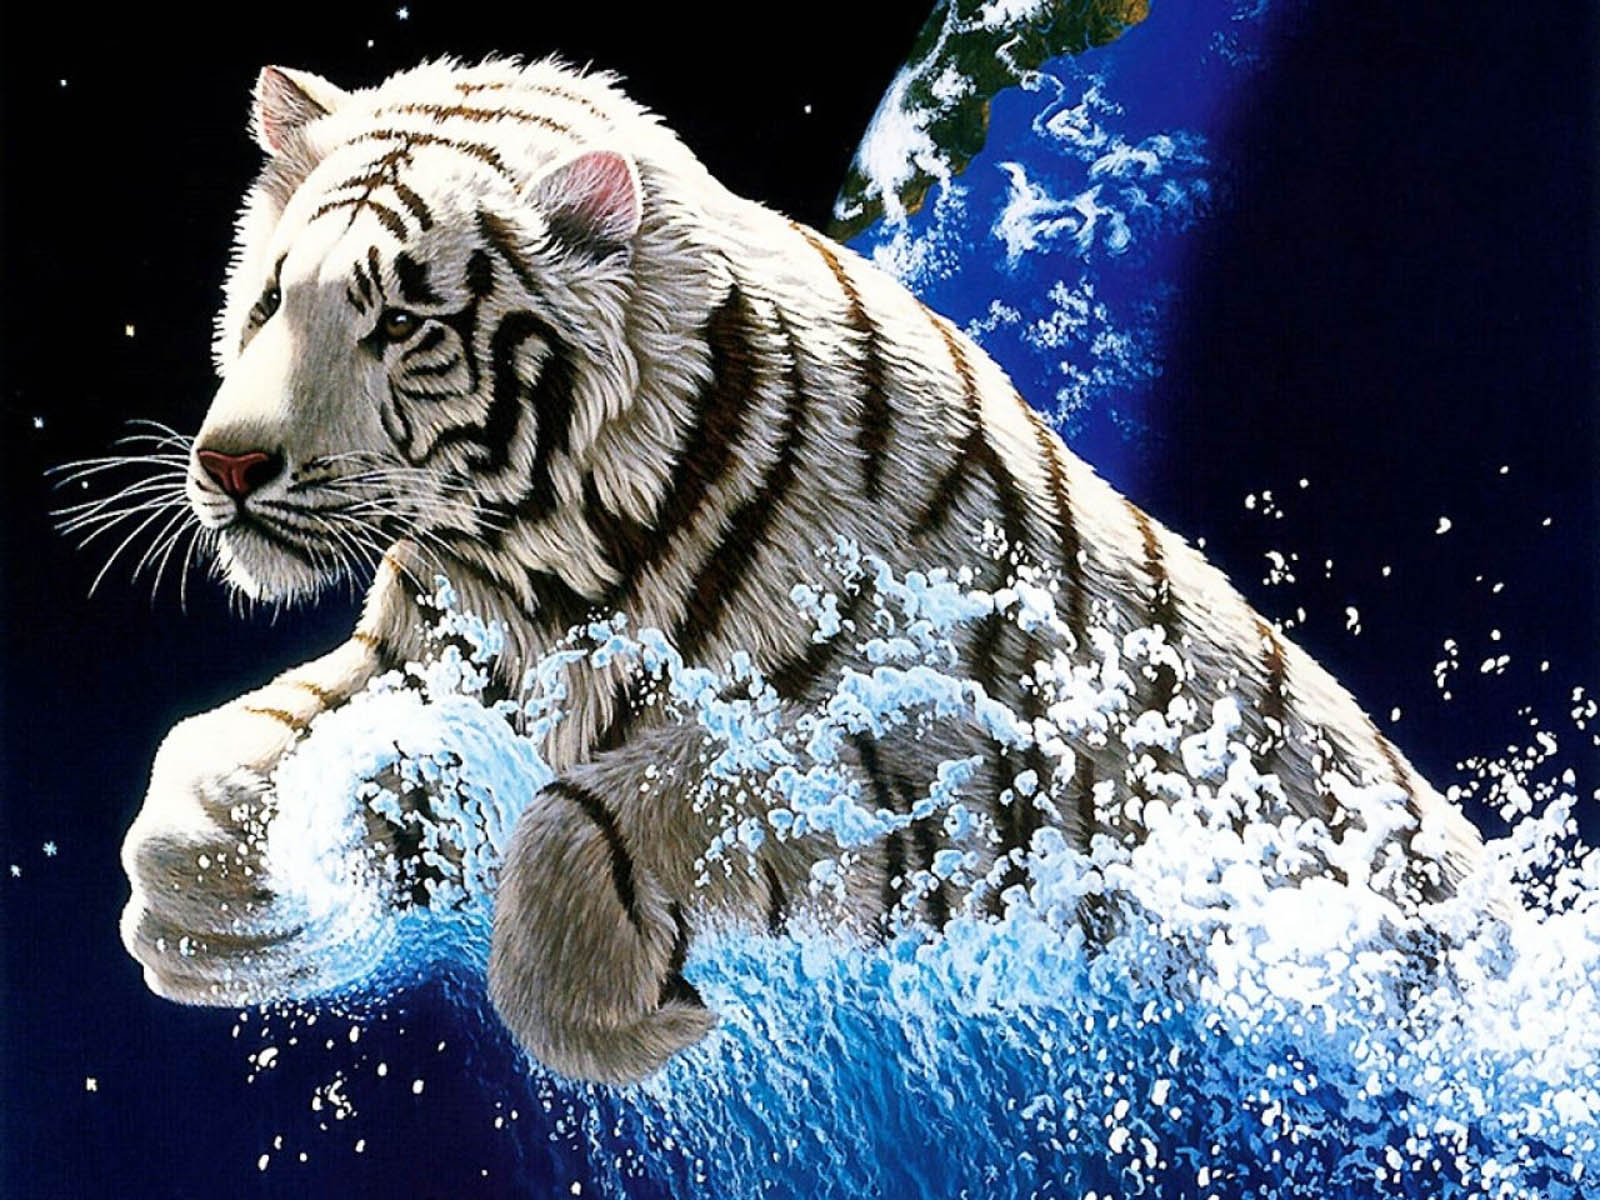 the Tiger 3D Wallpapers Tiger 3D Desktop Wallpapers Tiger 3D Desktop